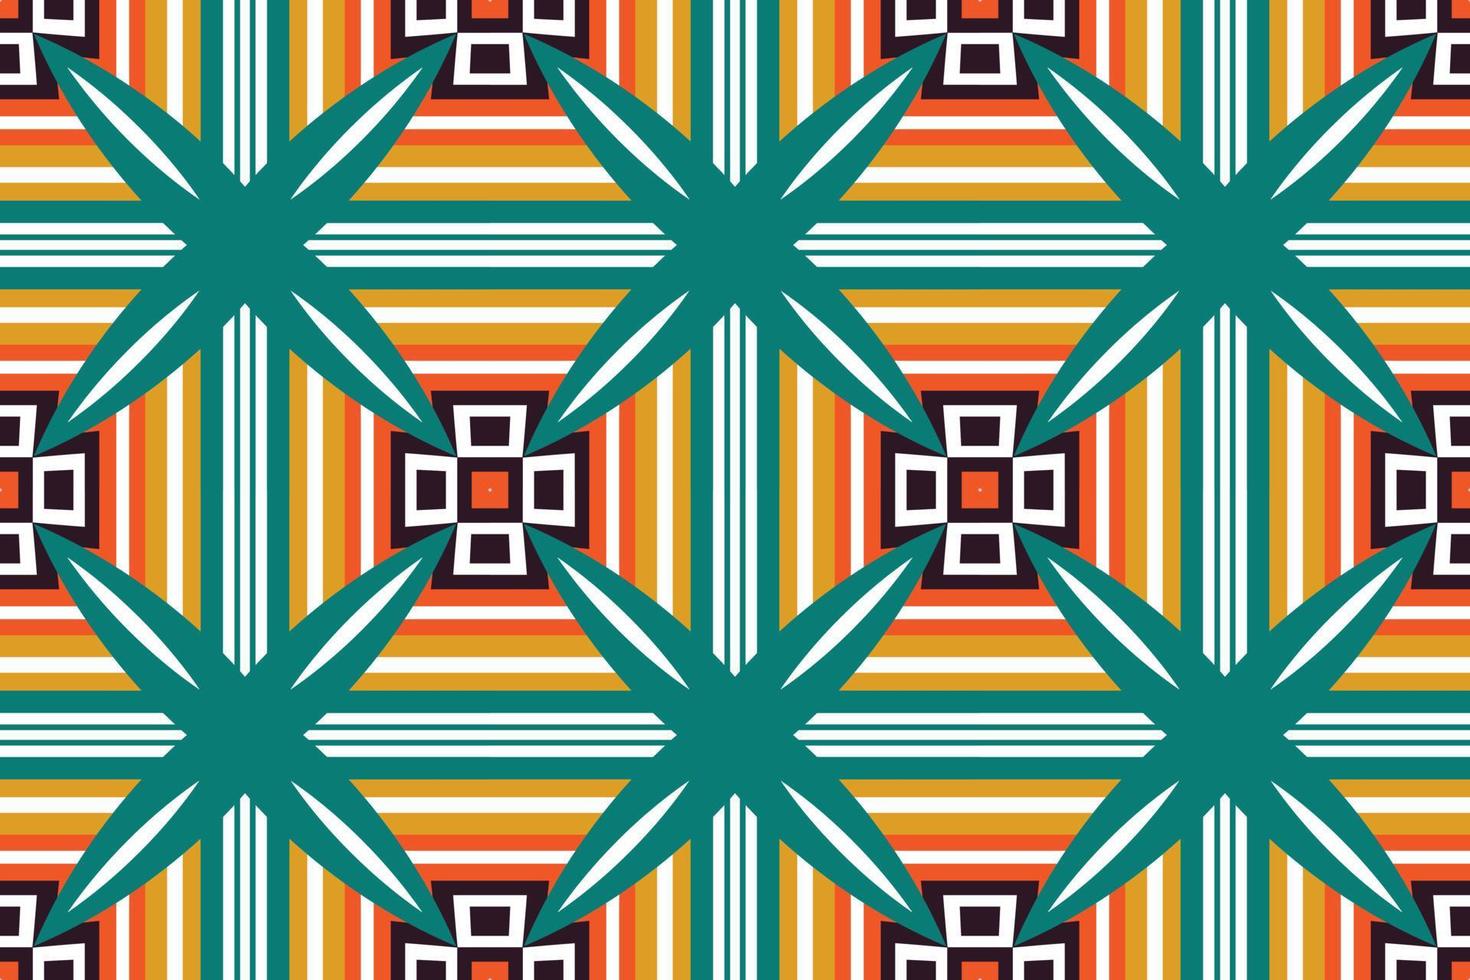 tela kente tela africana patrón tribal sin costuras papel digital kente tela kente africana impresión de tela tejida vector